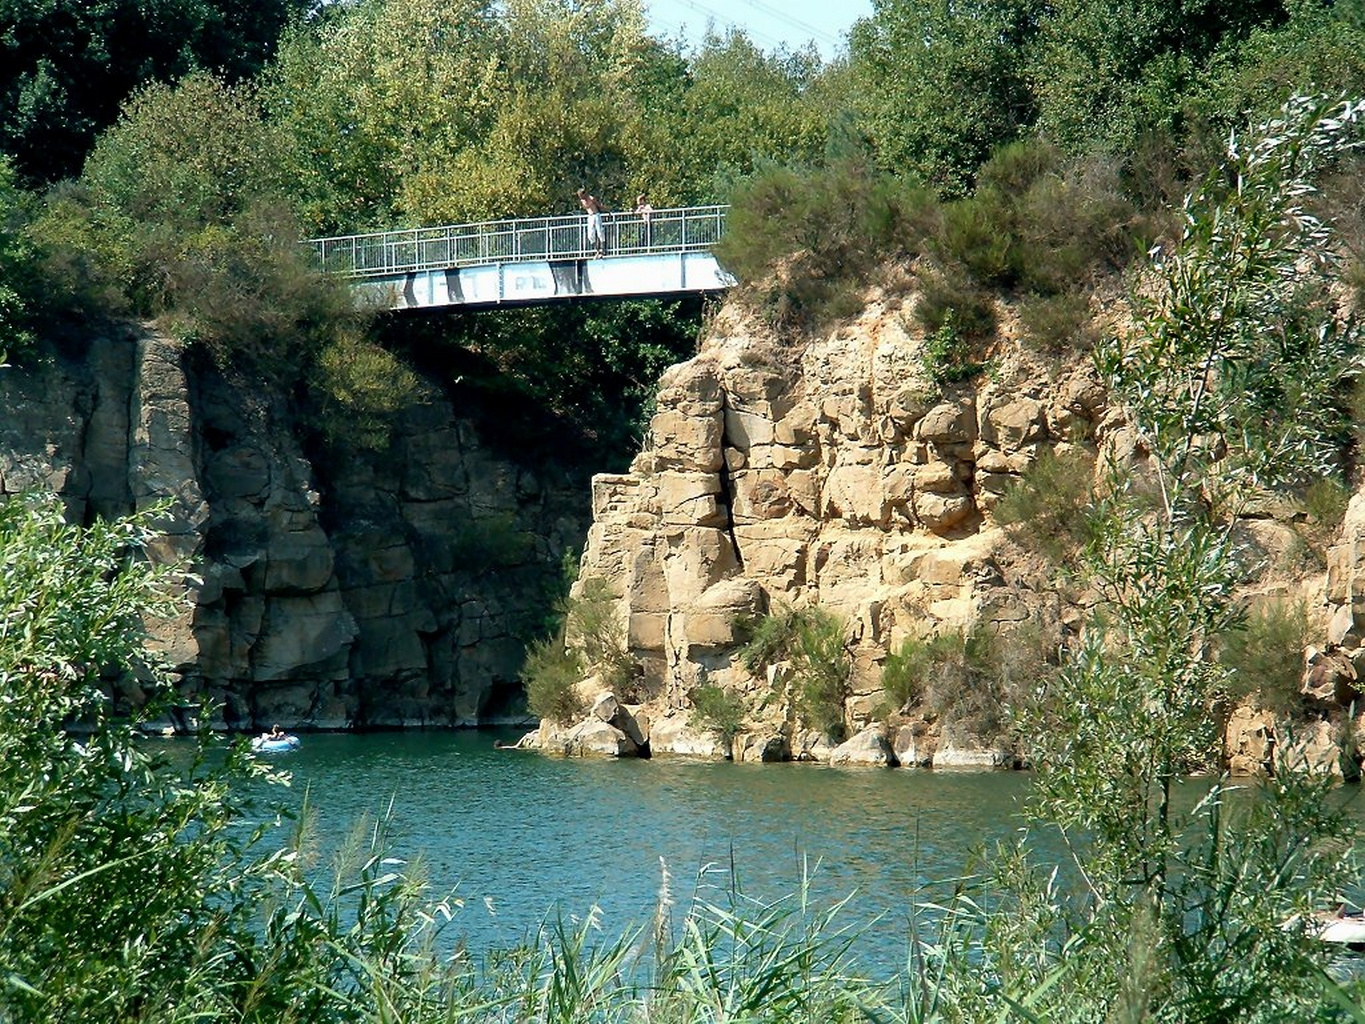 "Bridge on the lake"